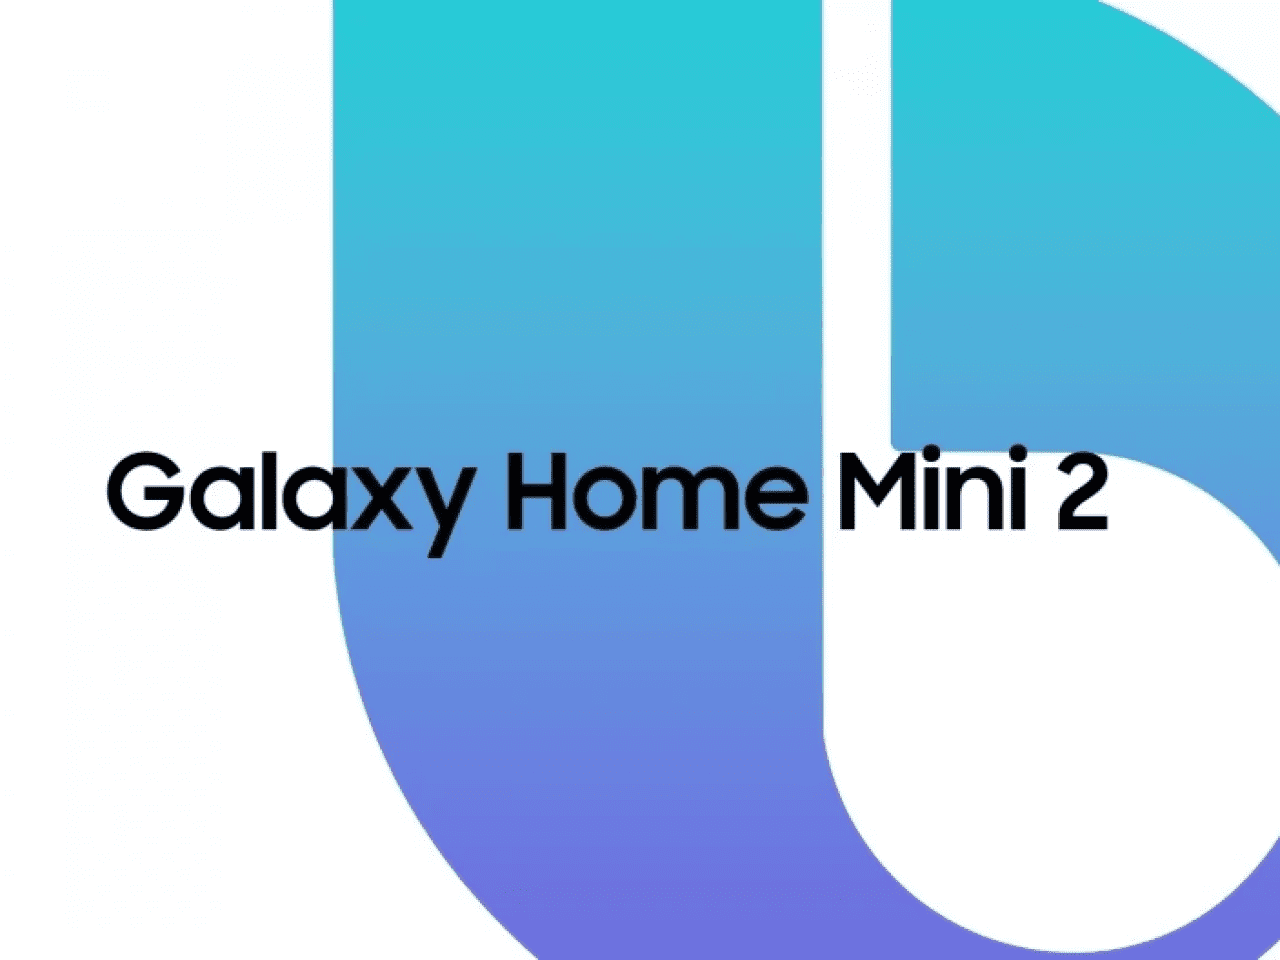 Galaxy Home Mini 2